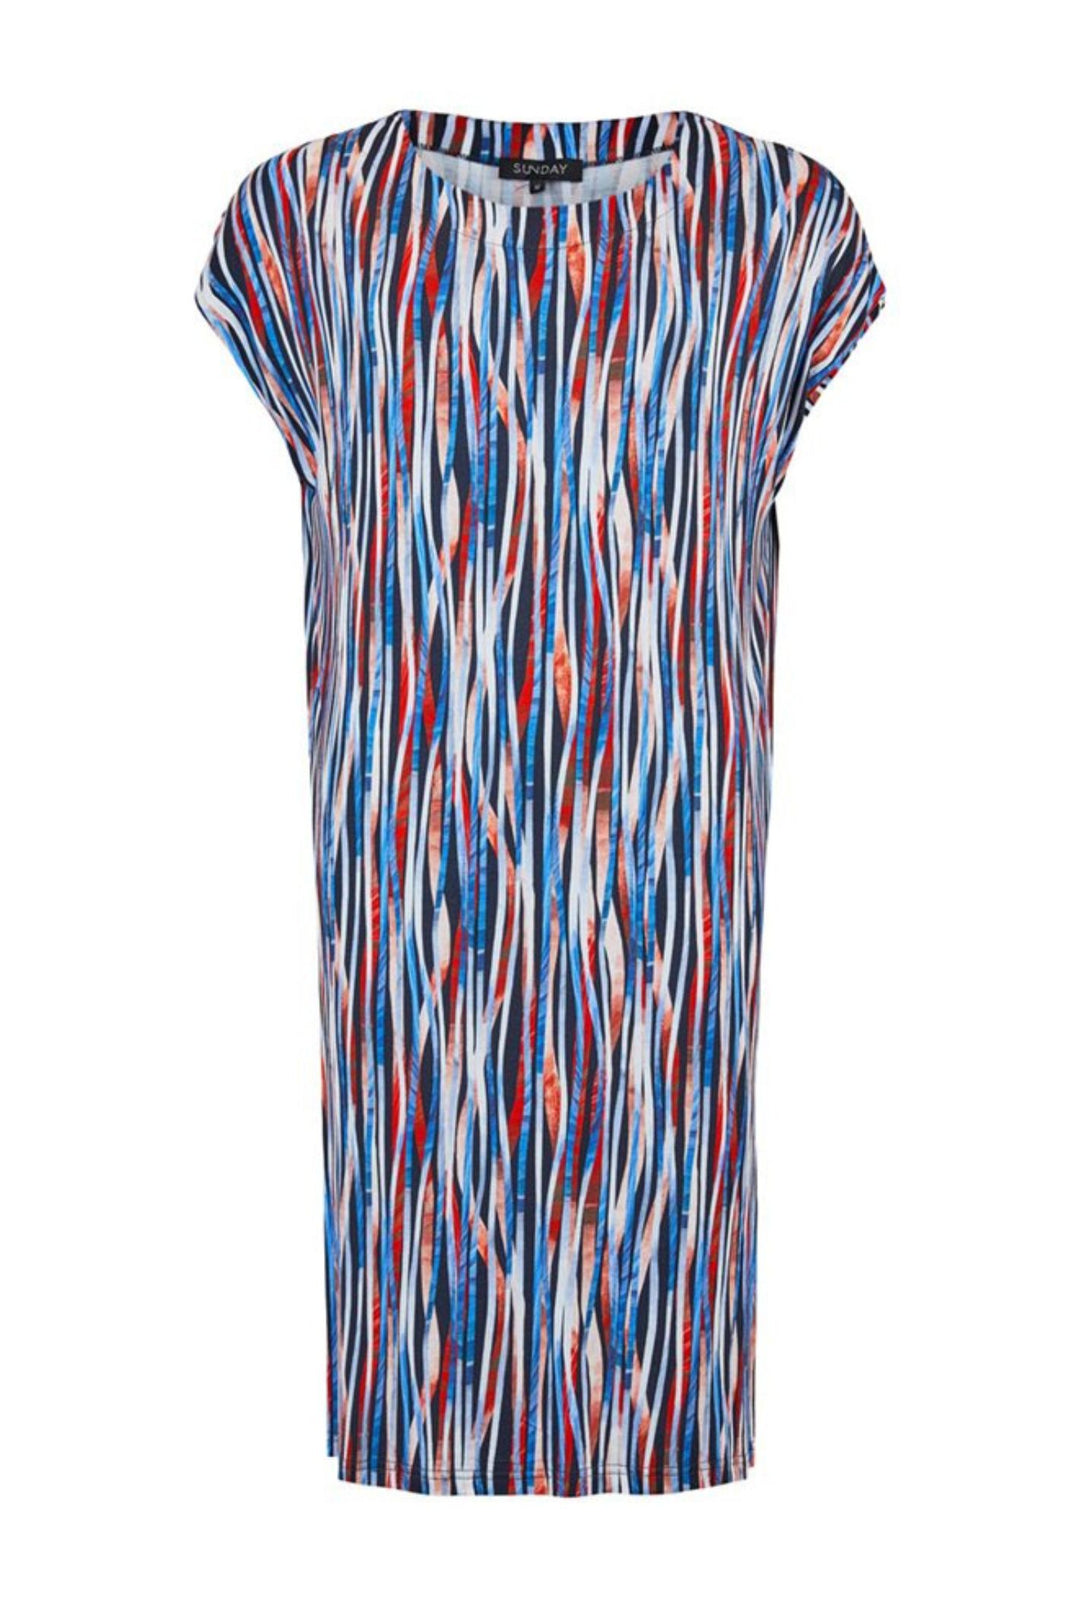 Sunday 6606 Blue & Red Wave Print Dress